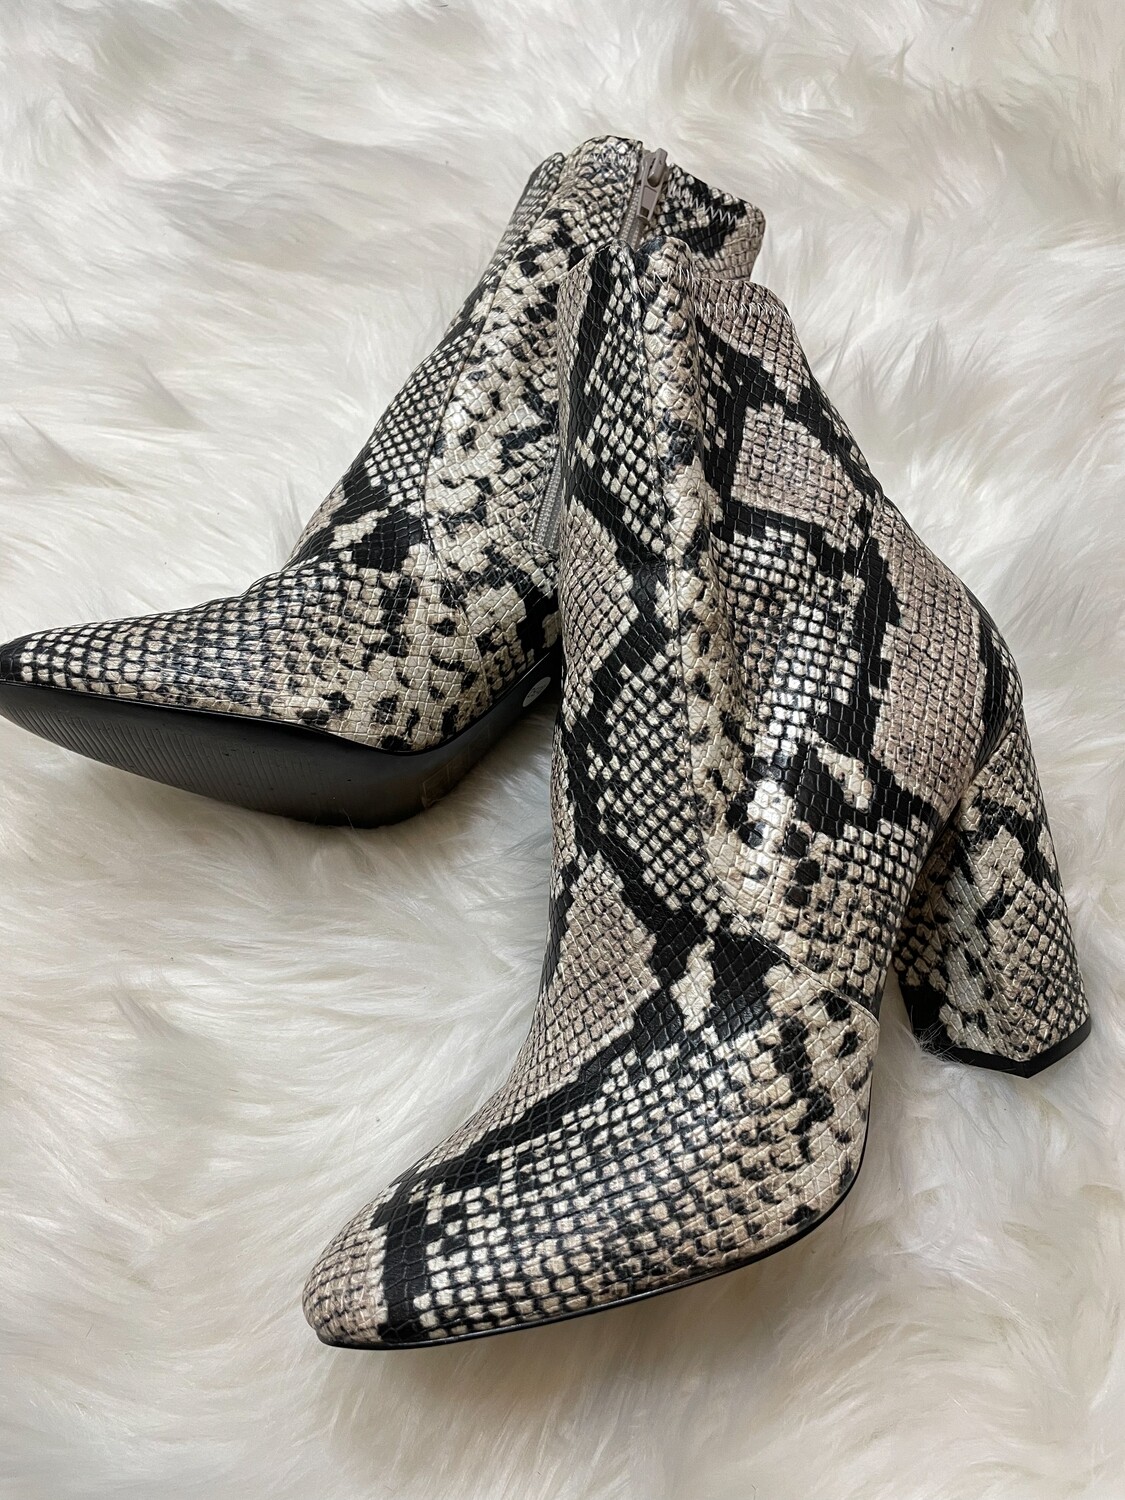 Aldo Snakeskin Heel Bootie - Size 8.5